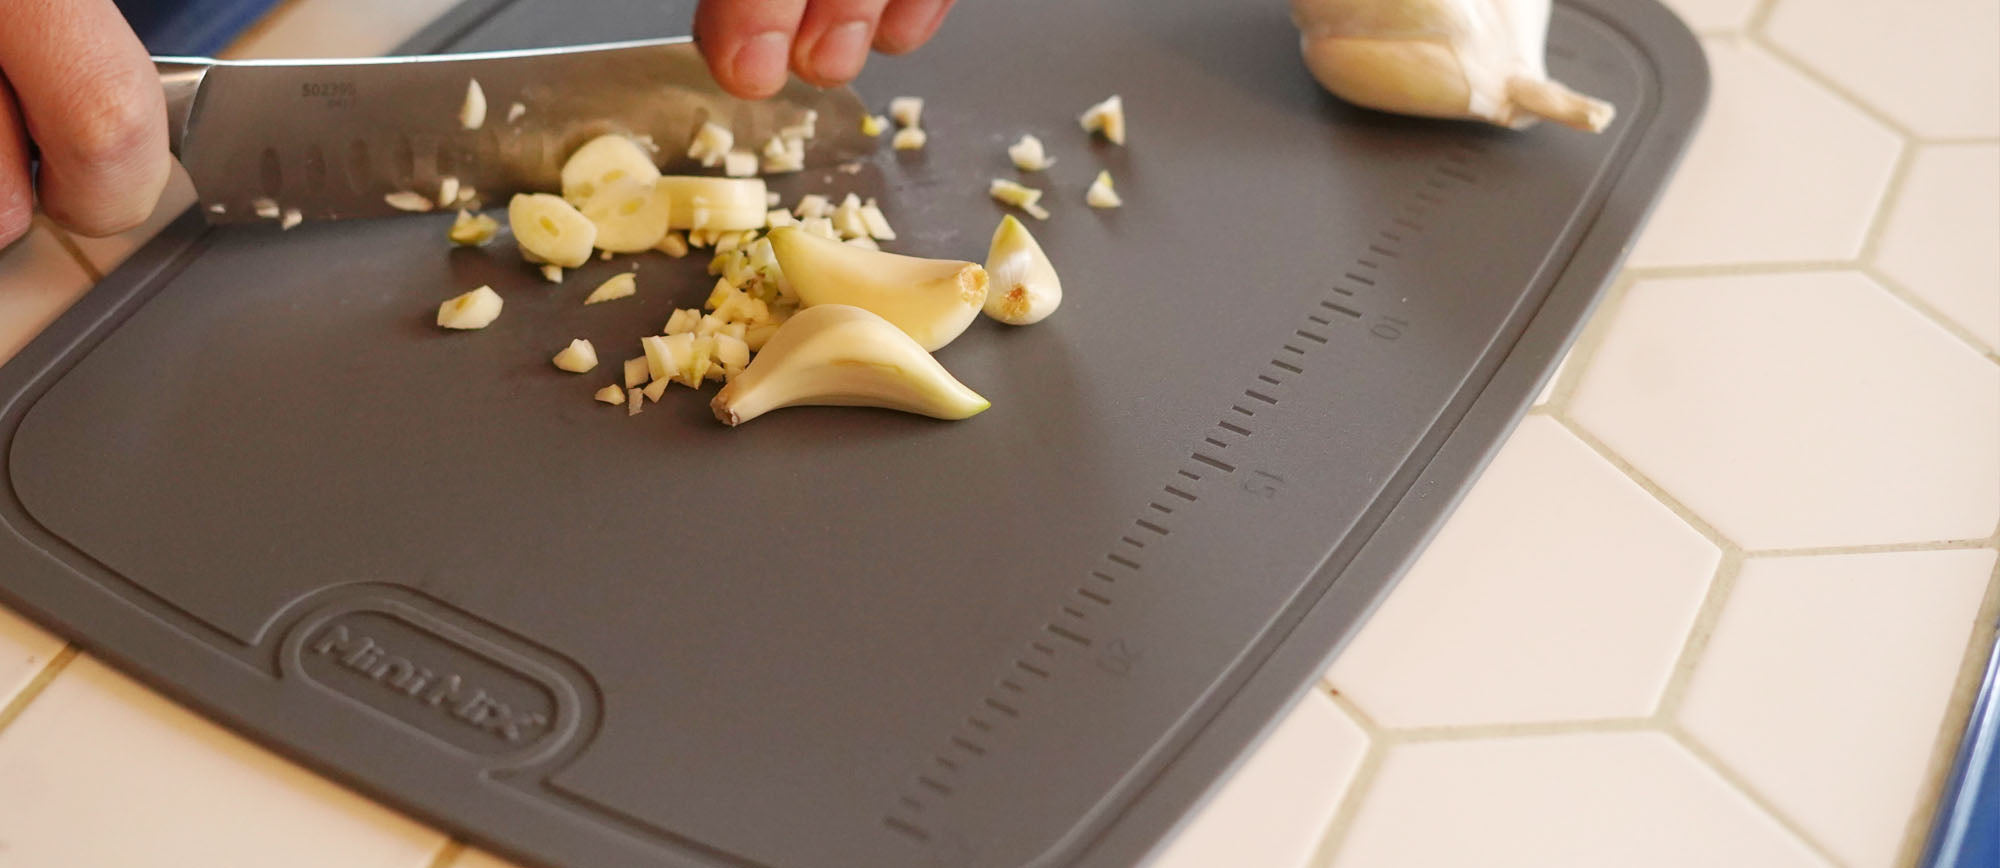 MINI MIX mini mix tpu cutting board - bpa free, flexible cutting